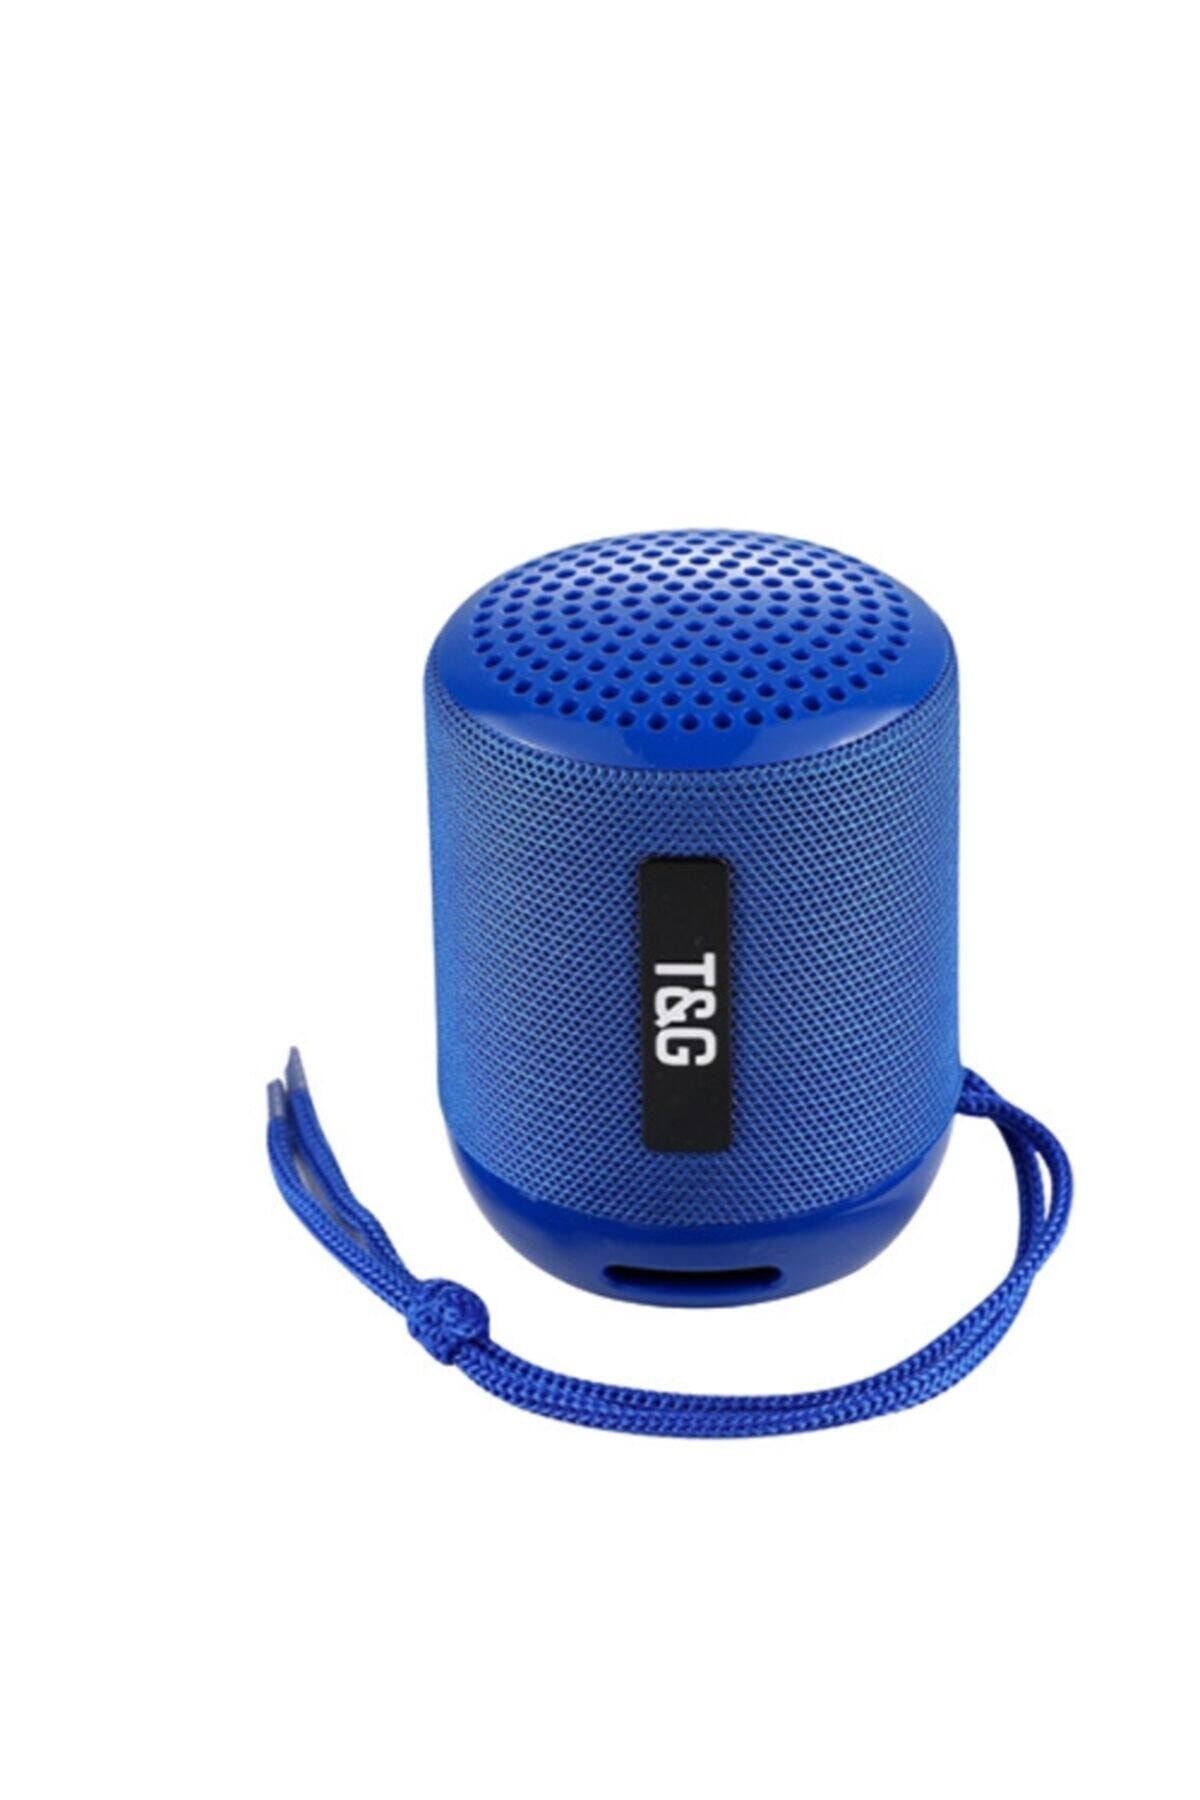 T G Taşınabilir Kablosuz Hoparlör Bluetooth Hoparlör Fm Radyo Usb Flash / Sd Kart Girişli 339